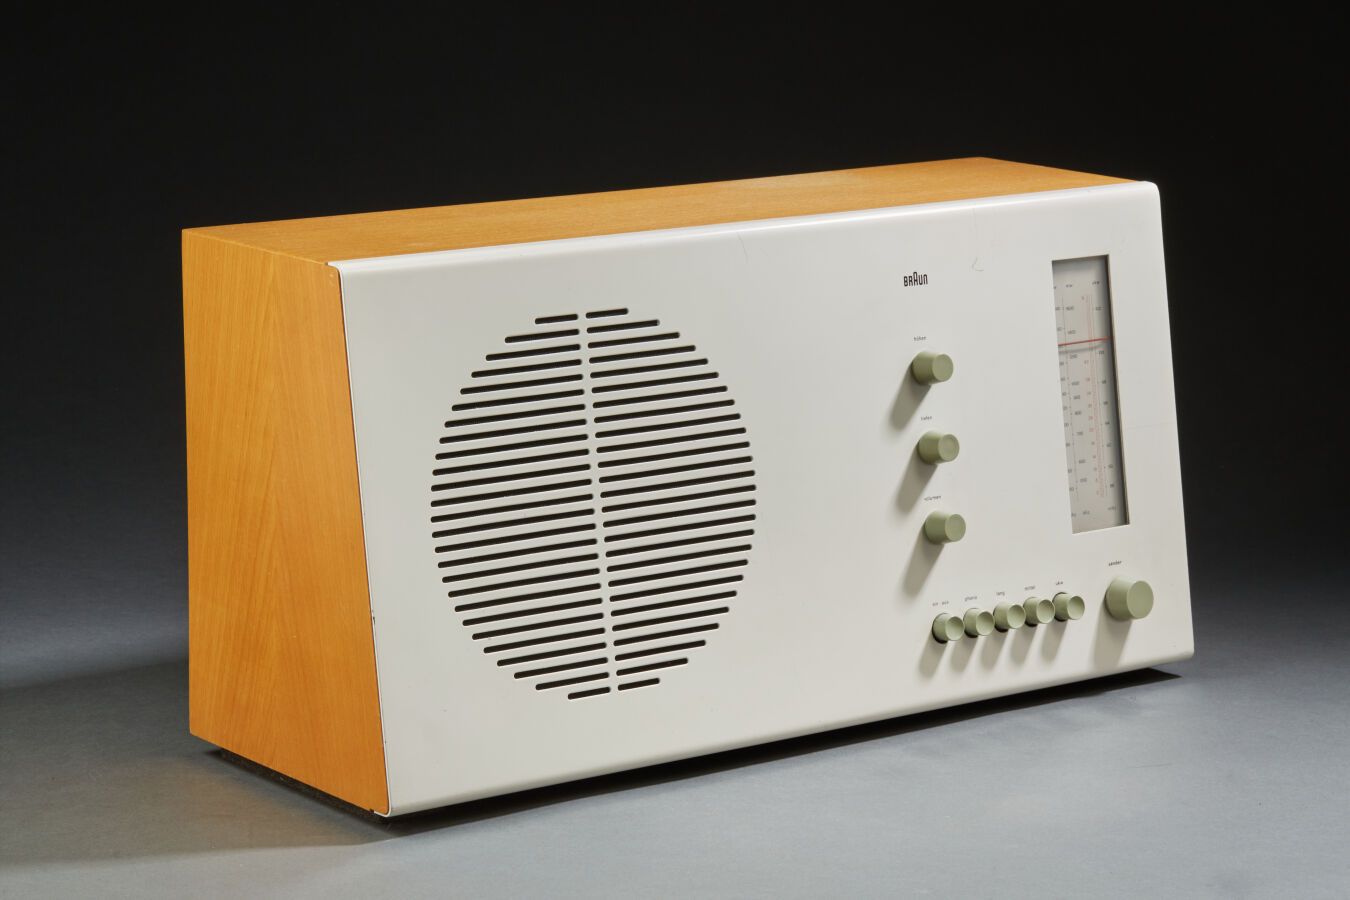 Null BRAUN RT20扩音机，由Dieter Rams设计，1961-1964年生产。

高度：25厘米 - 宽度：50厘米 - 深度：18厘米